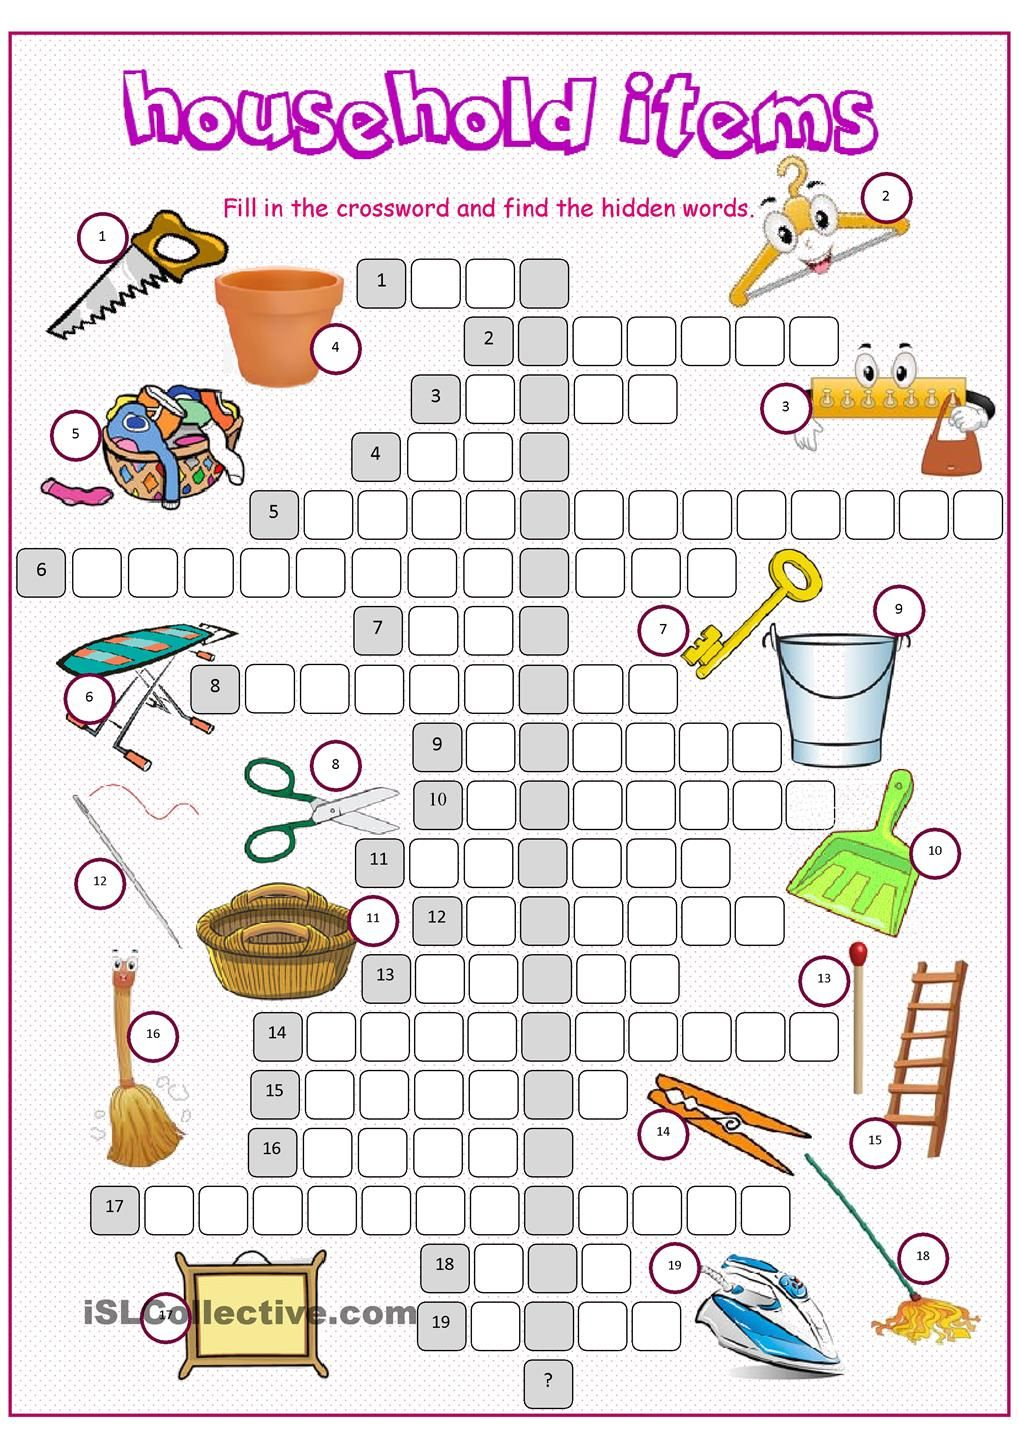 Household Items Crossword Puzzle | Esl - Vocabulary - House - Printable Esl Puzzles